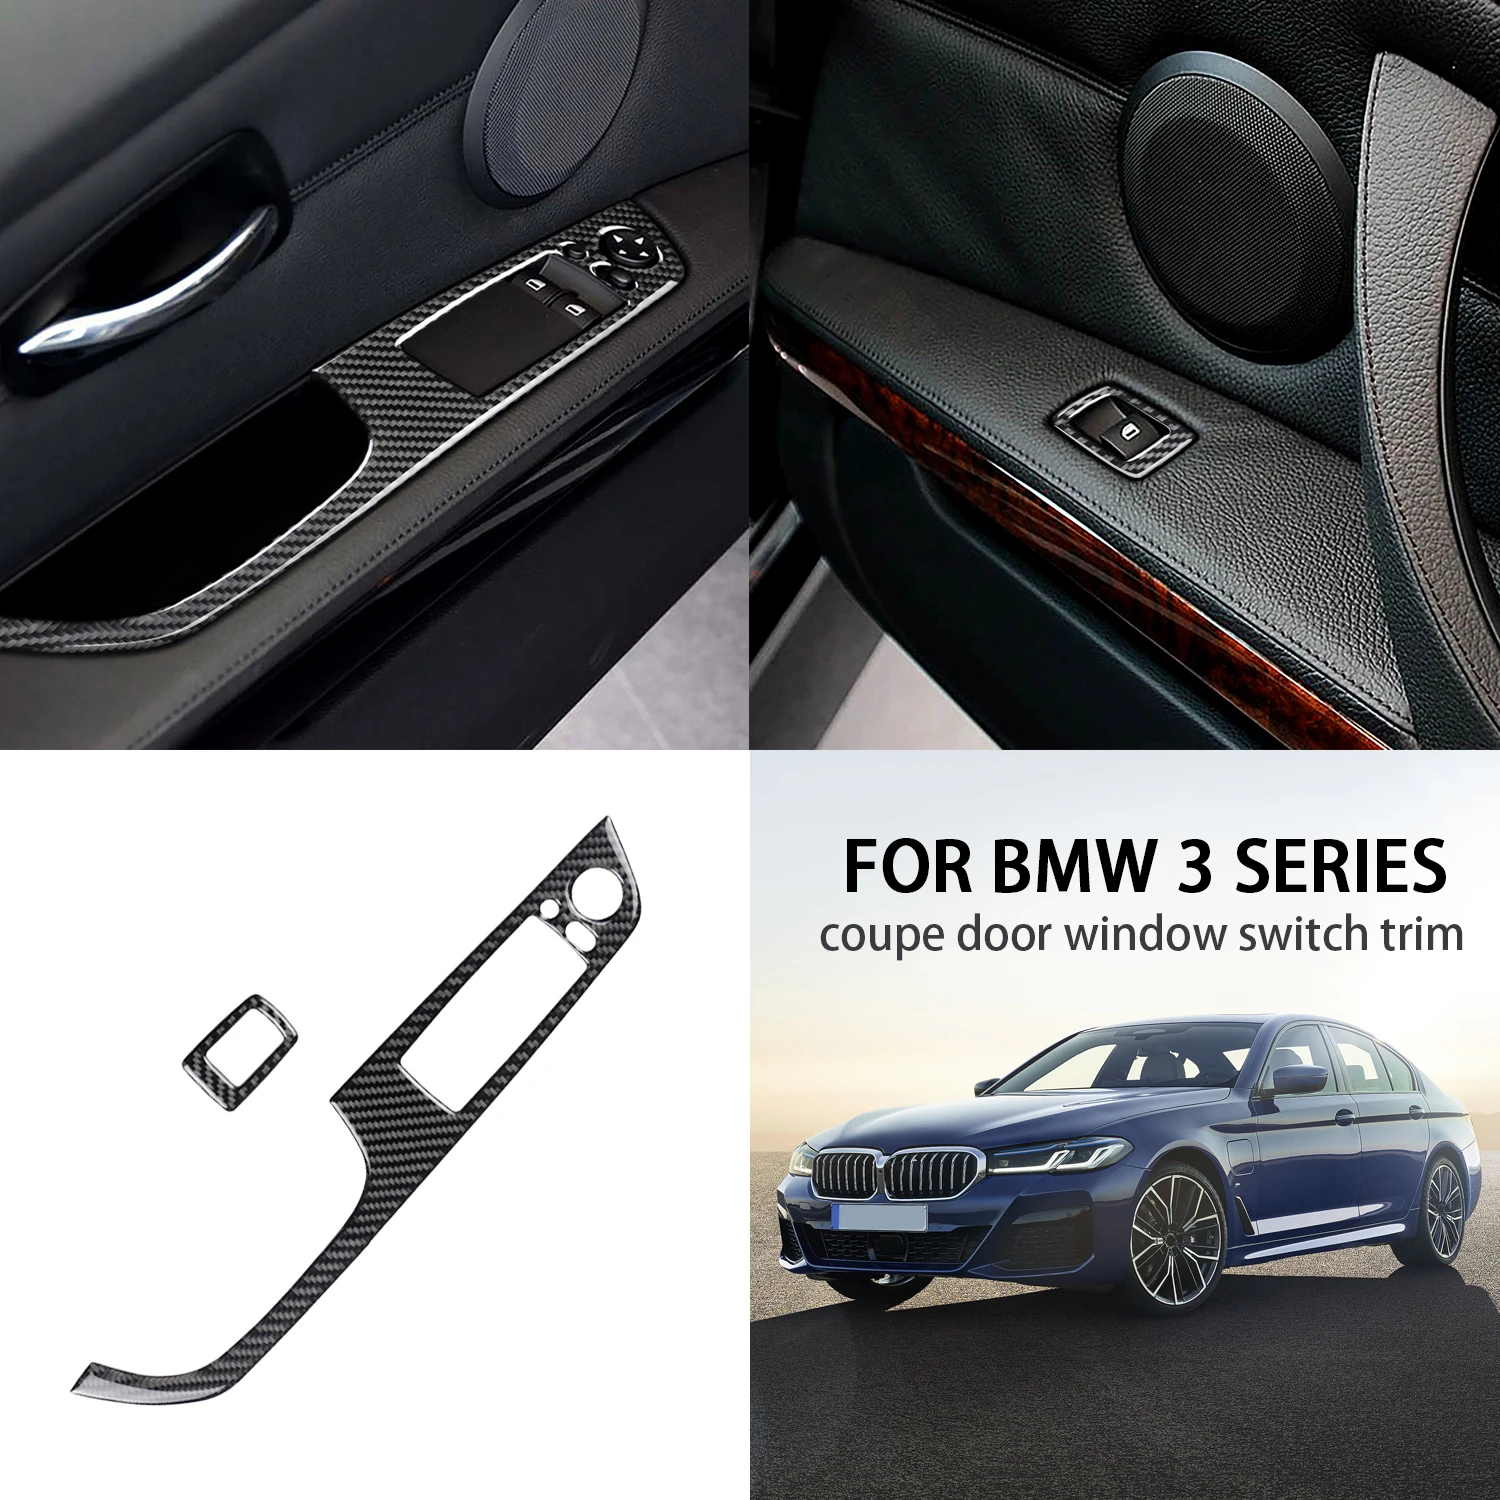 

2Pcs Real Carbon Fiber Door Casement Lift Switch Cover Trim For BMW 3 Series E92 Coupe Door Window Switch Trims Car Accessory